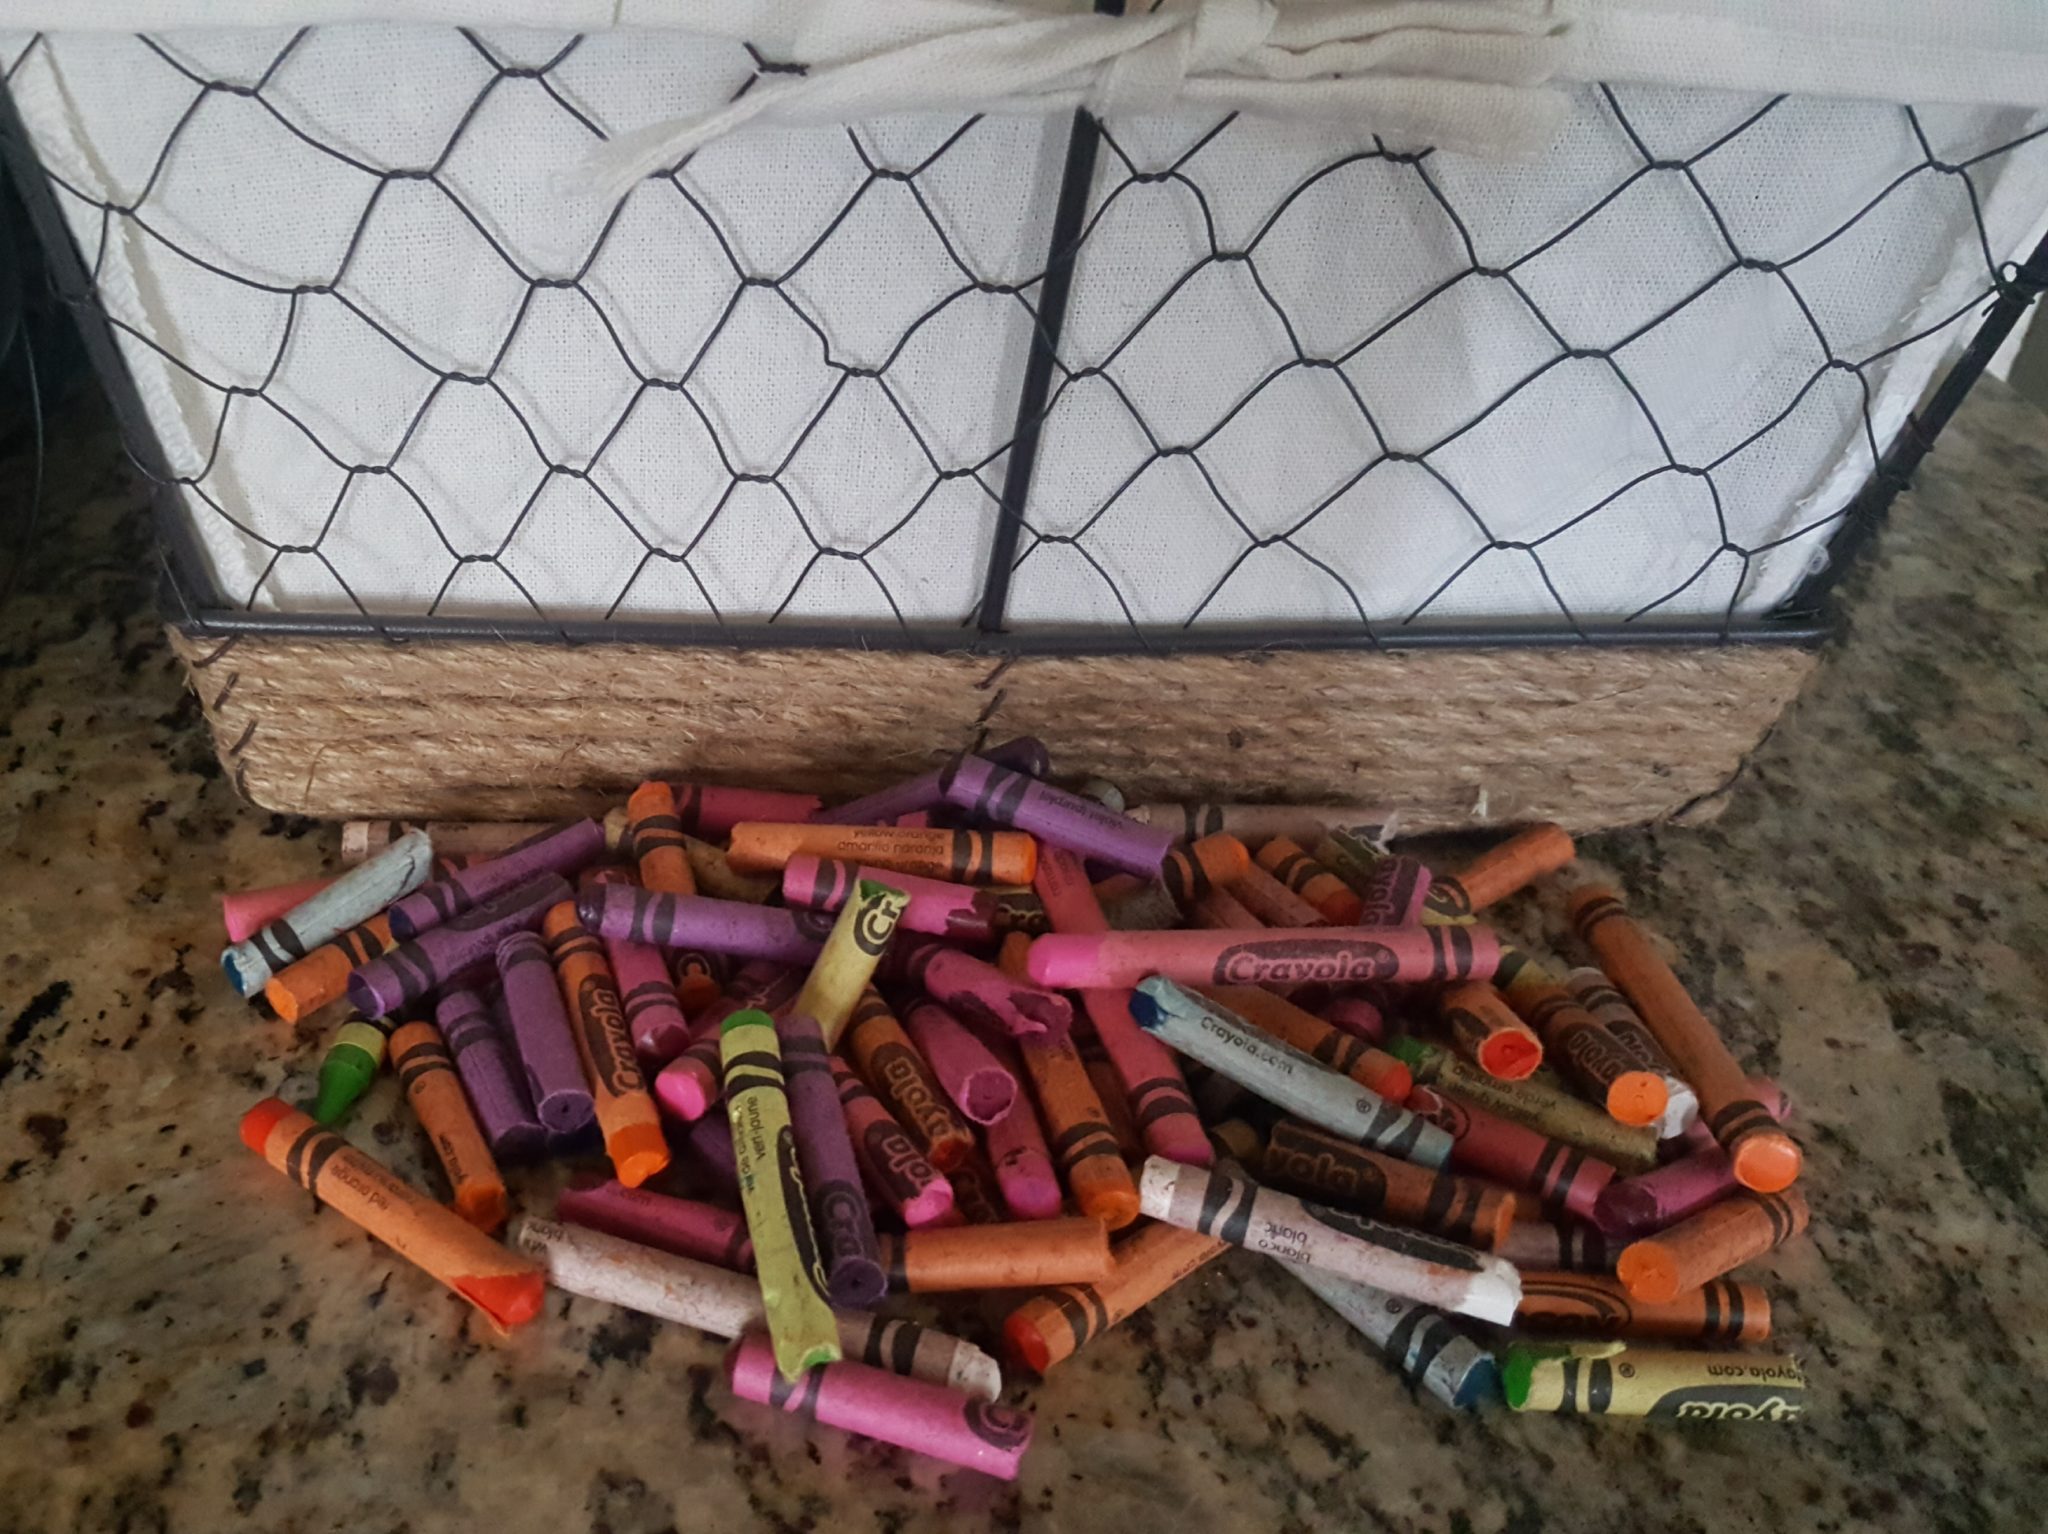 NEW DATE: DIY Rainbow Crayons - Families